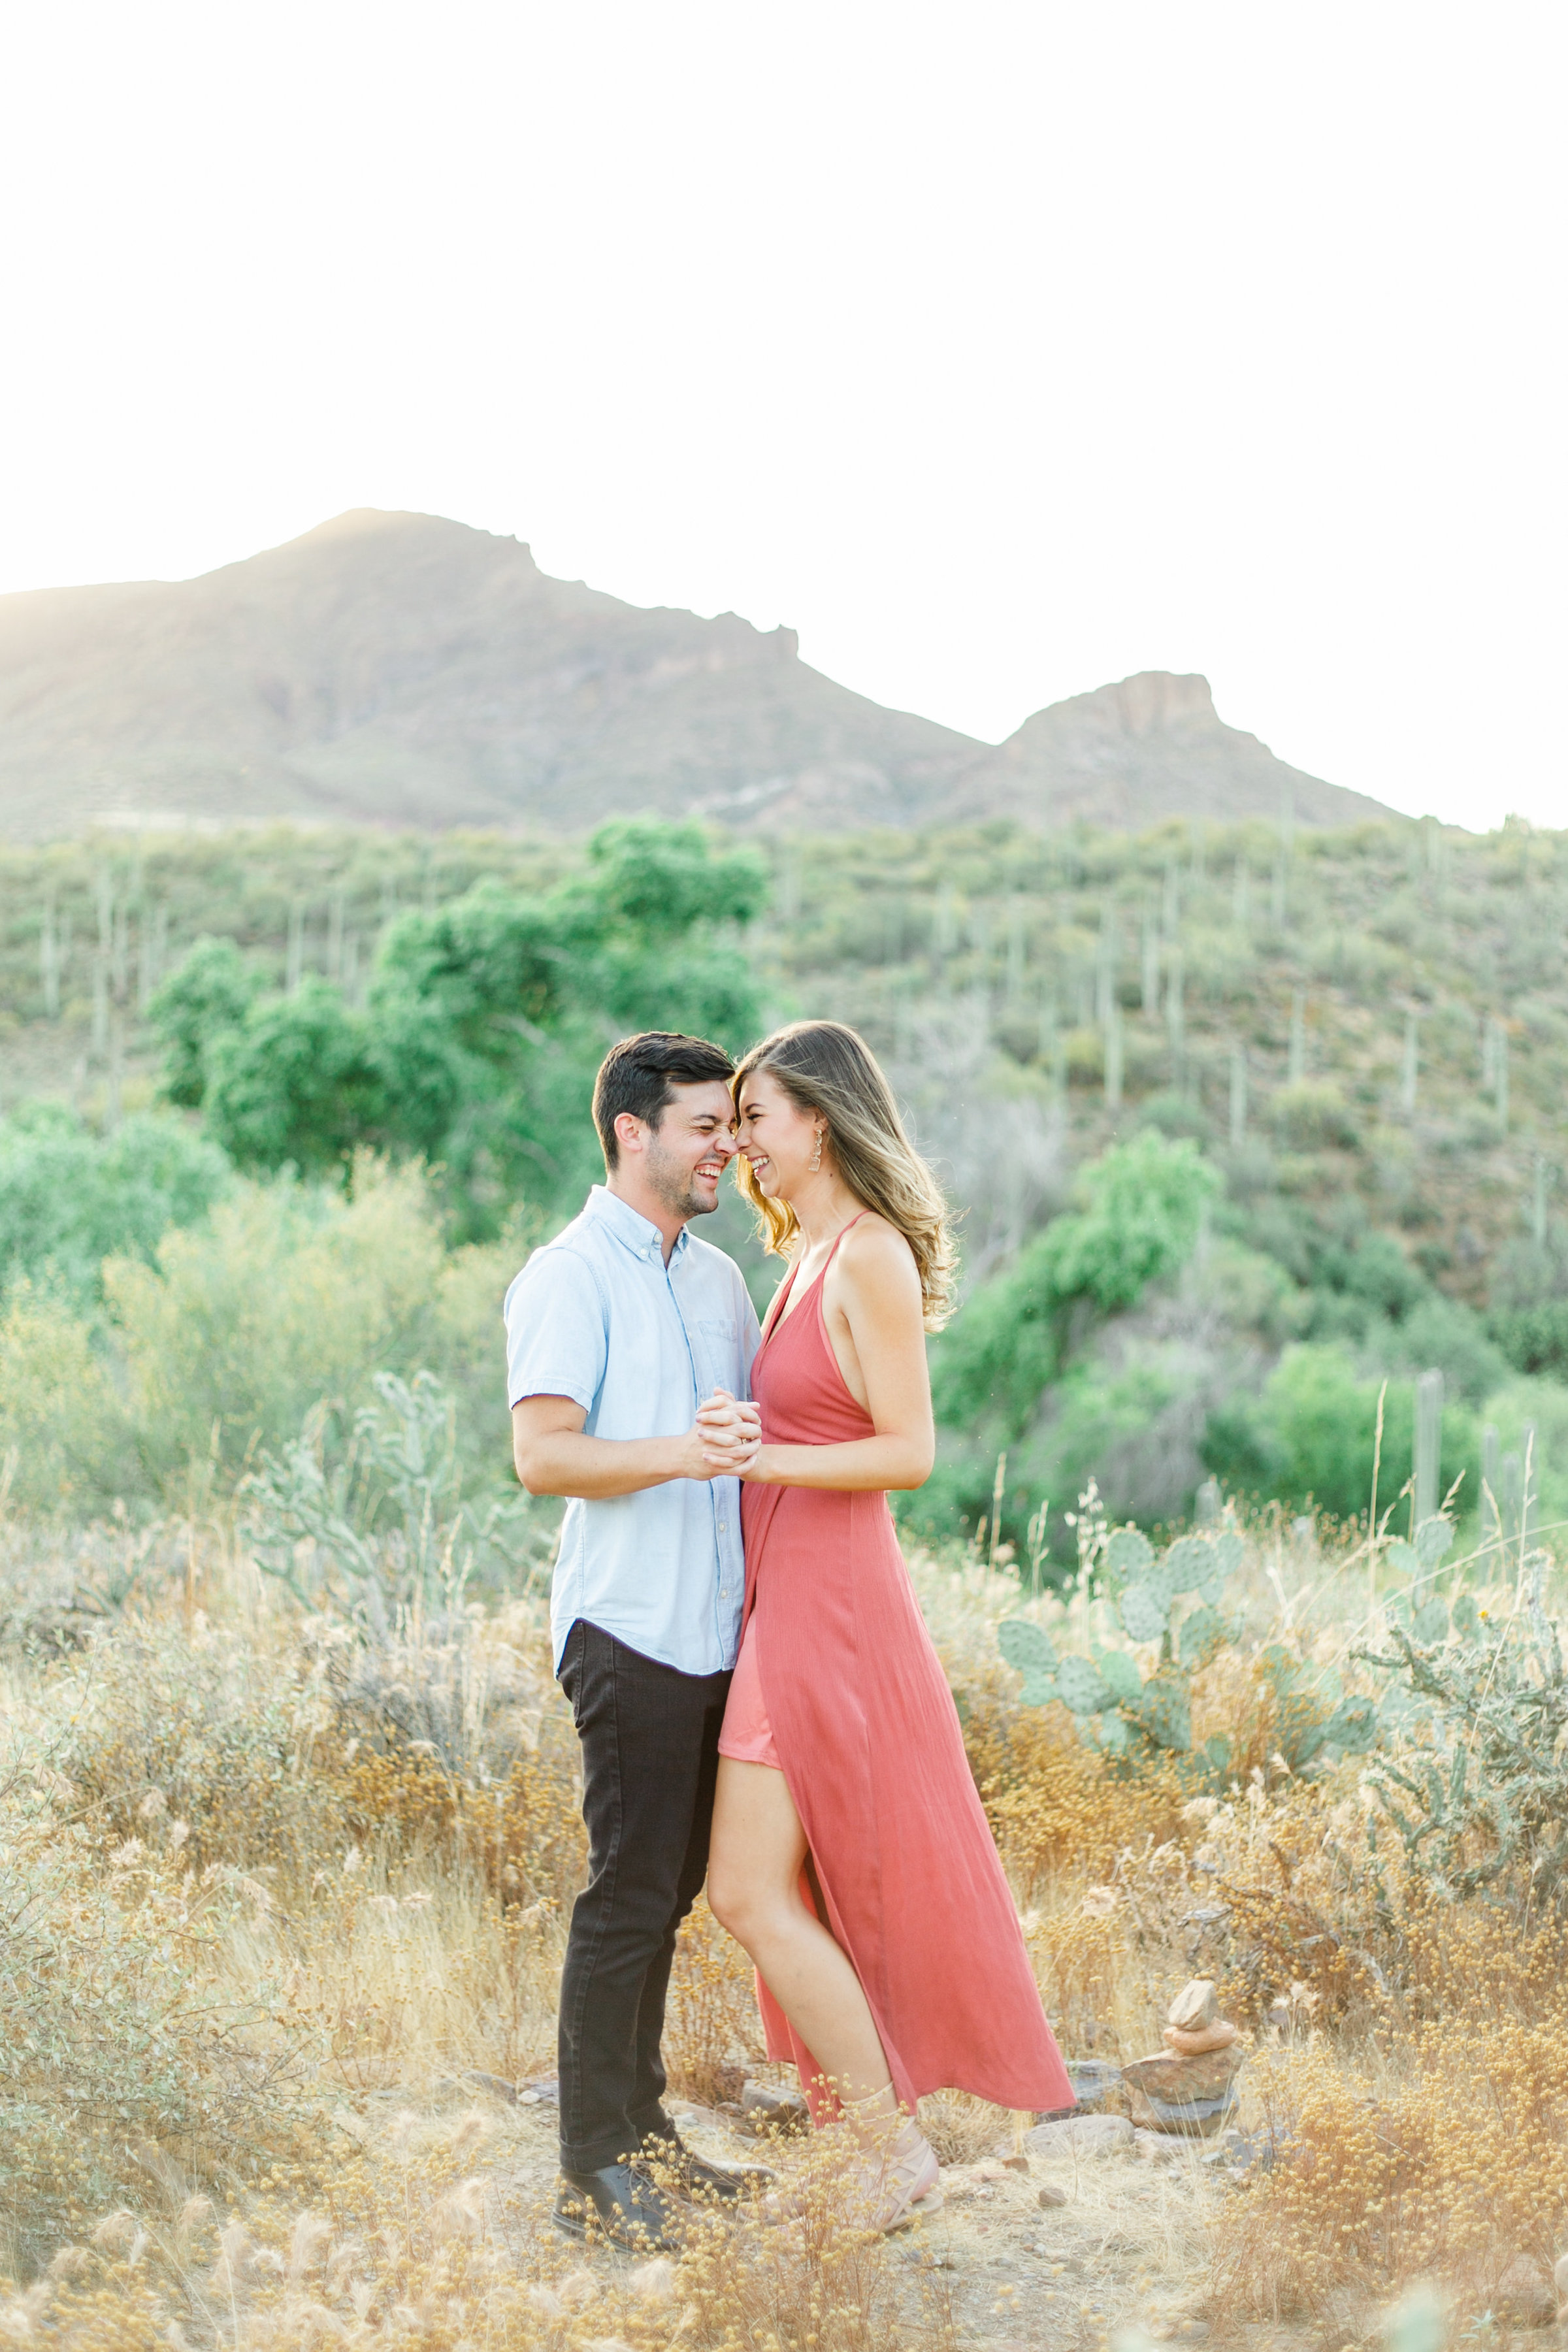 Karlie Colleen Photography - Arizona Desert Engagement - Brynne & Josh -152